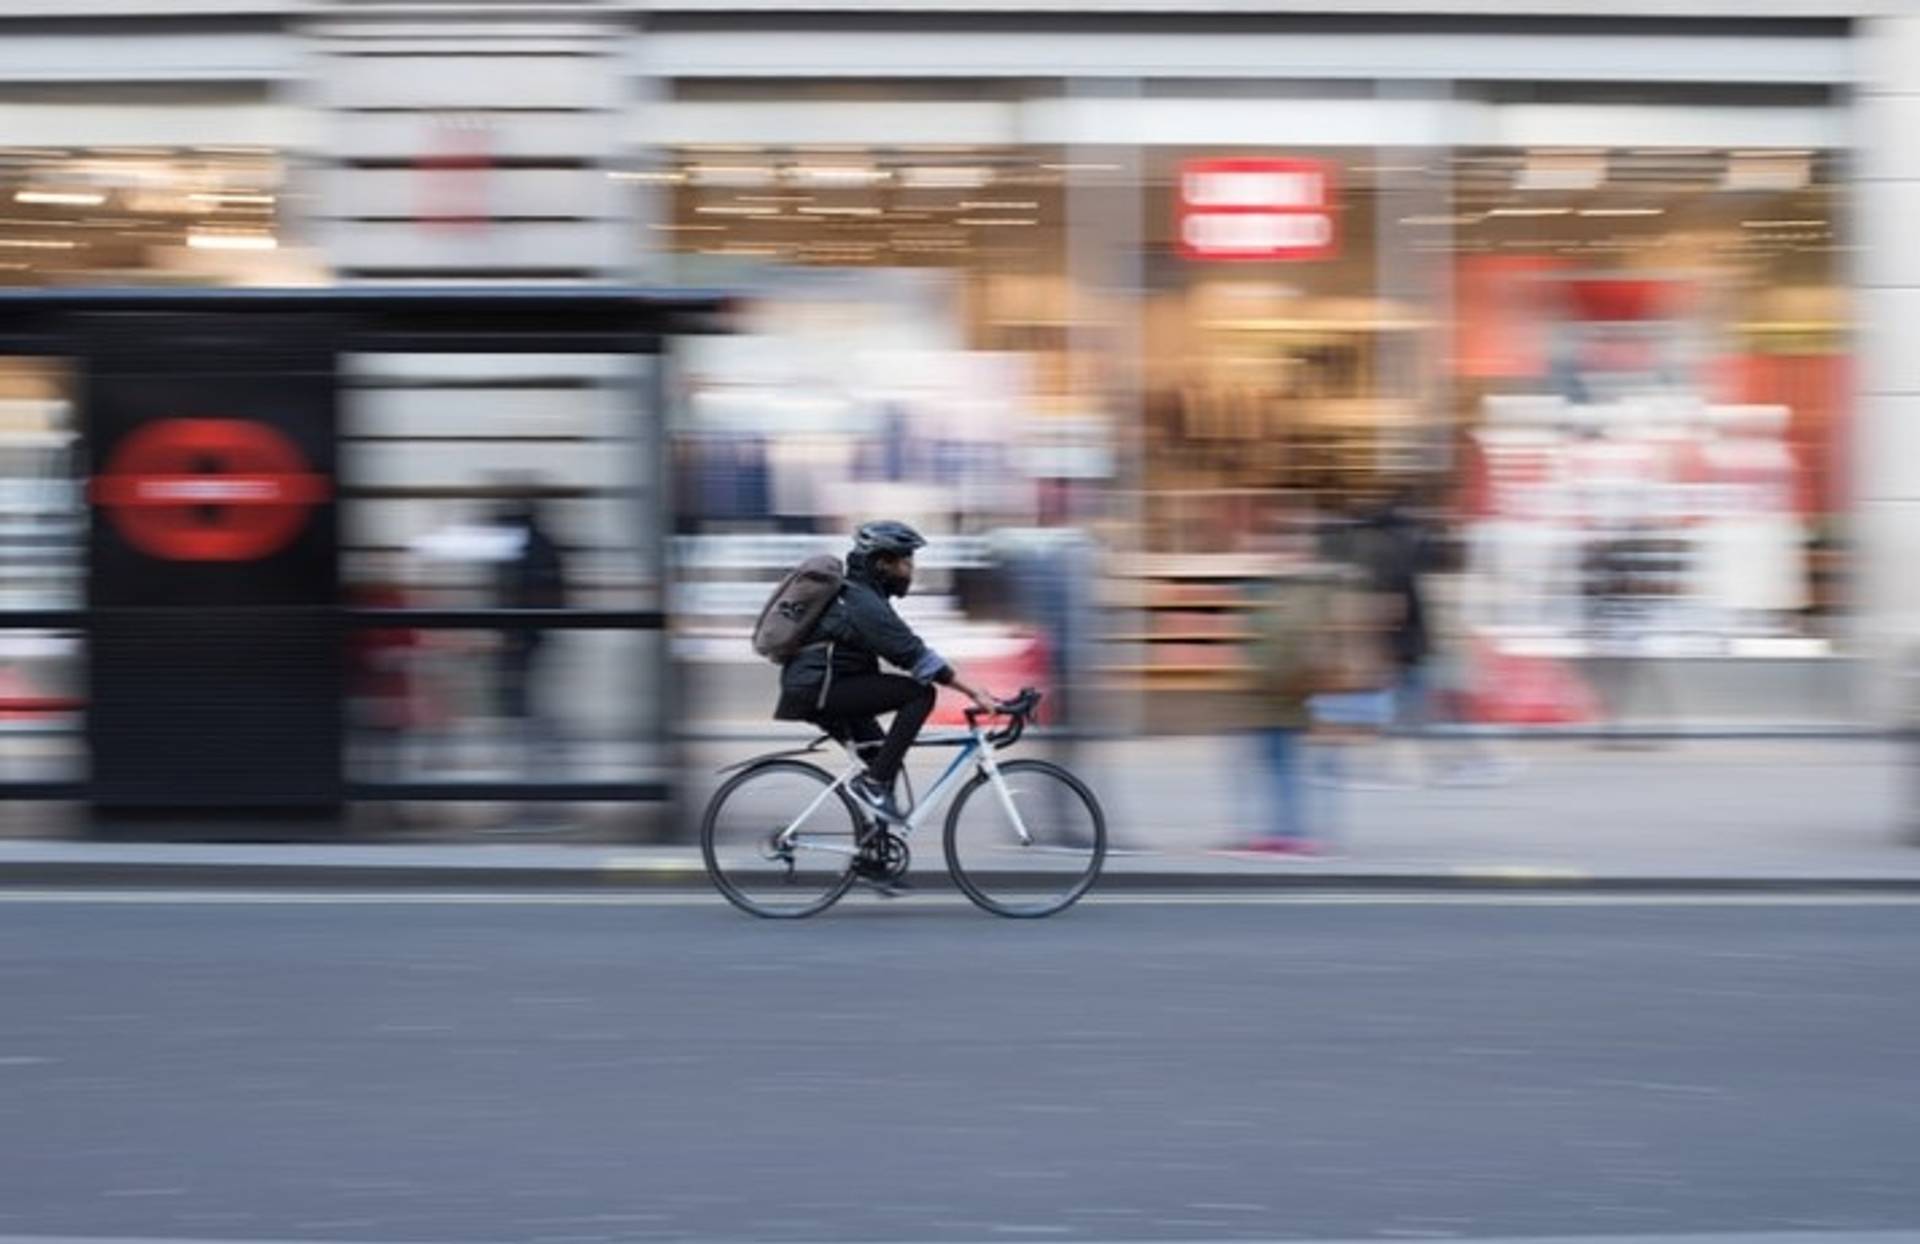 Safety-seeking Britons shake up commute routines